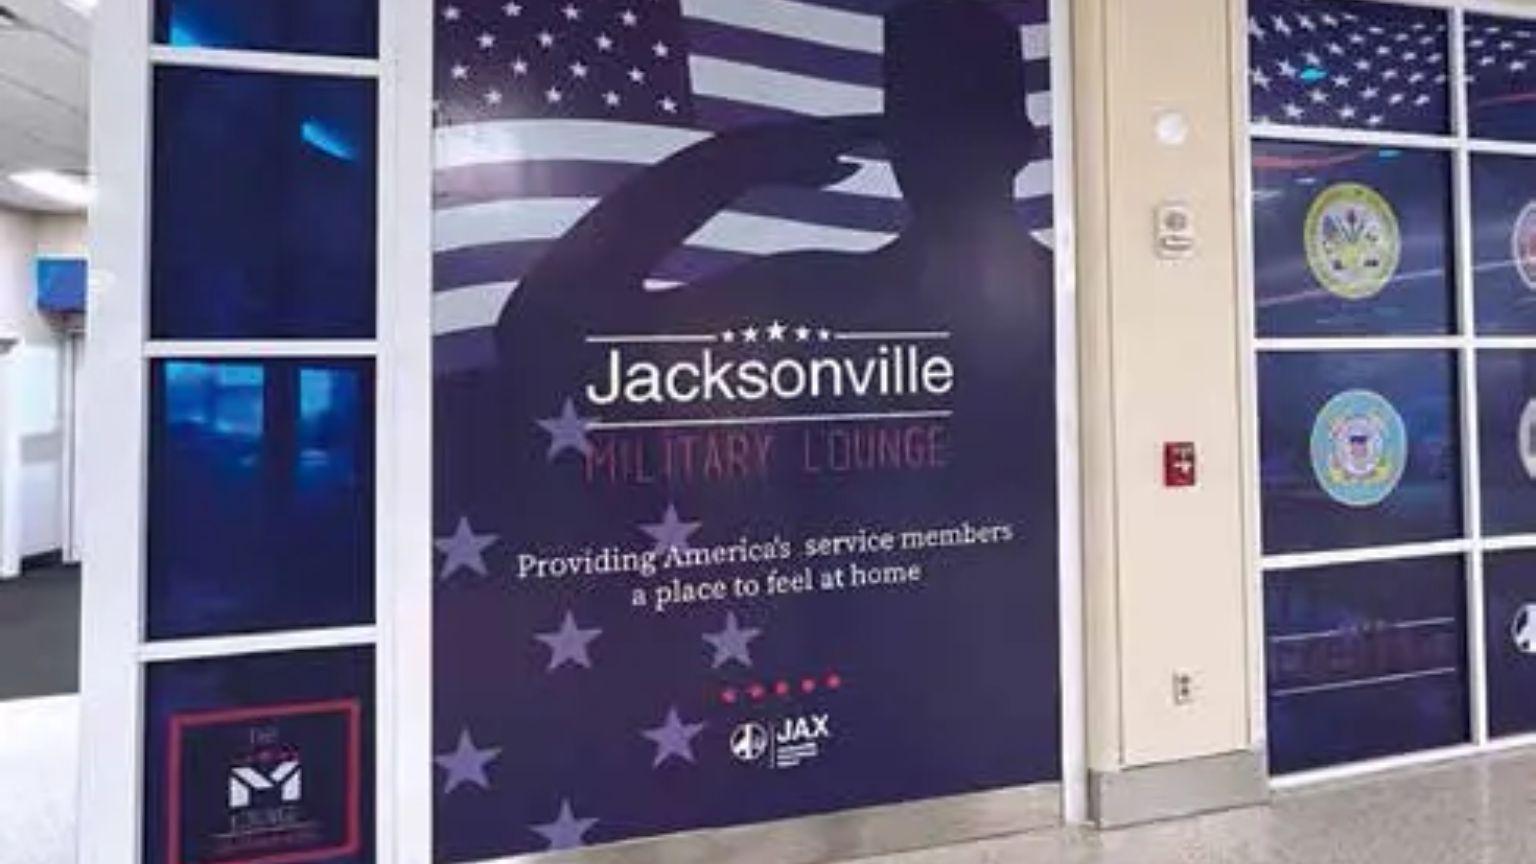 Jacksonville Airport Military Lounge, Main Terminal